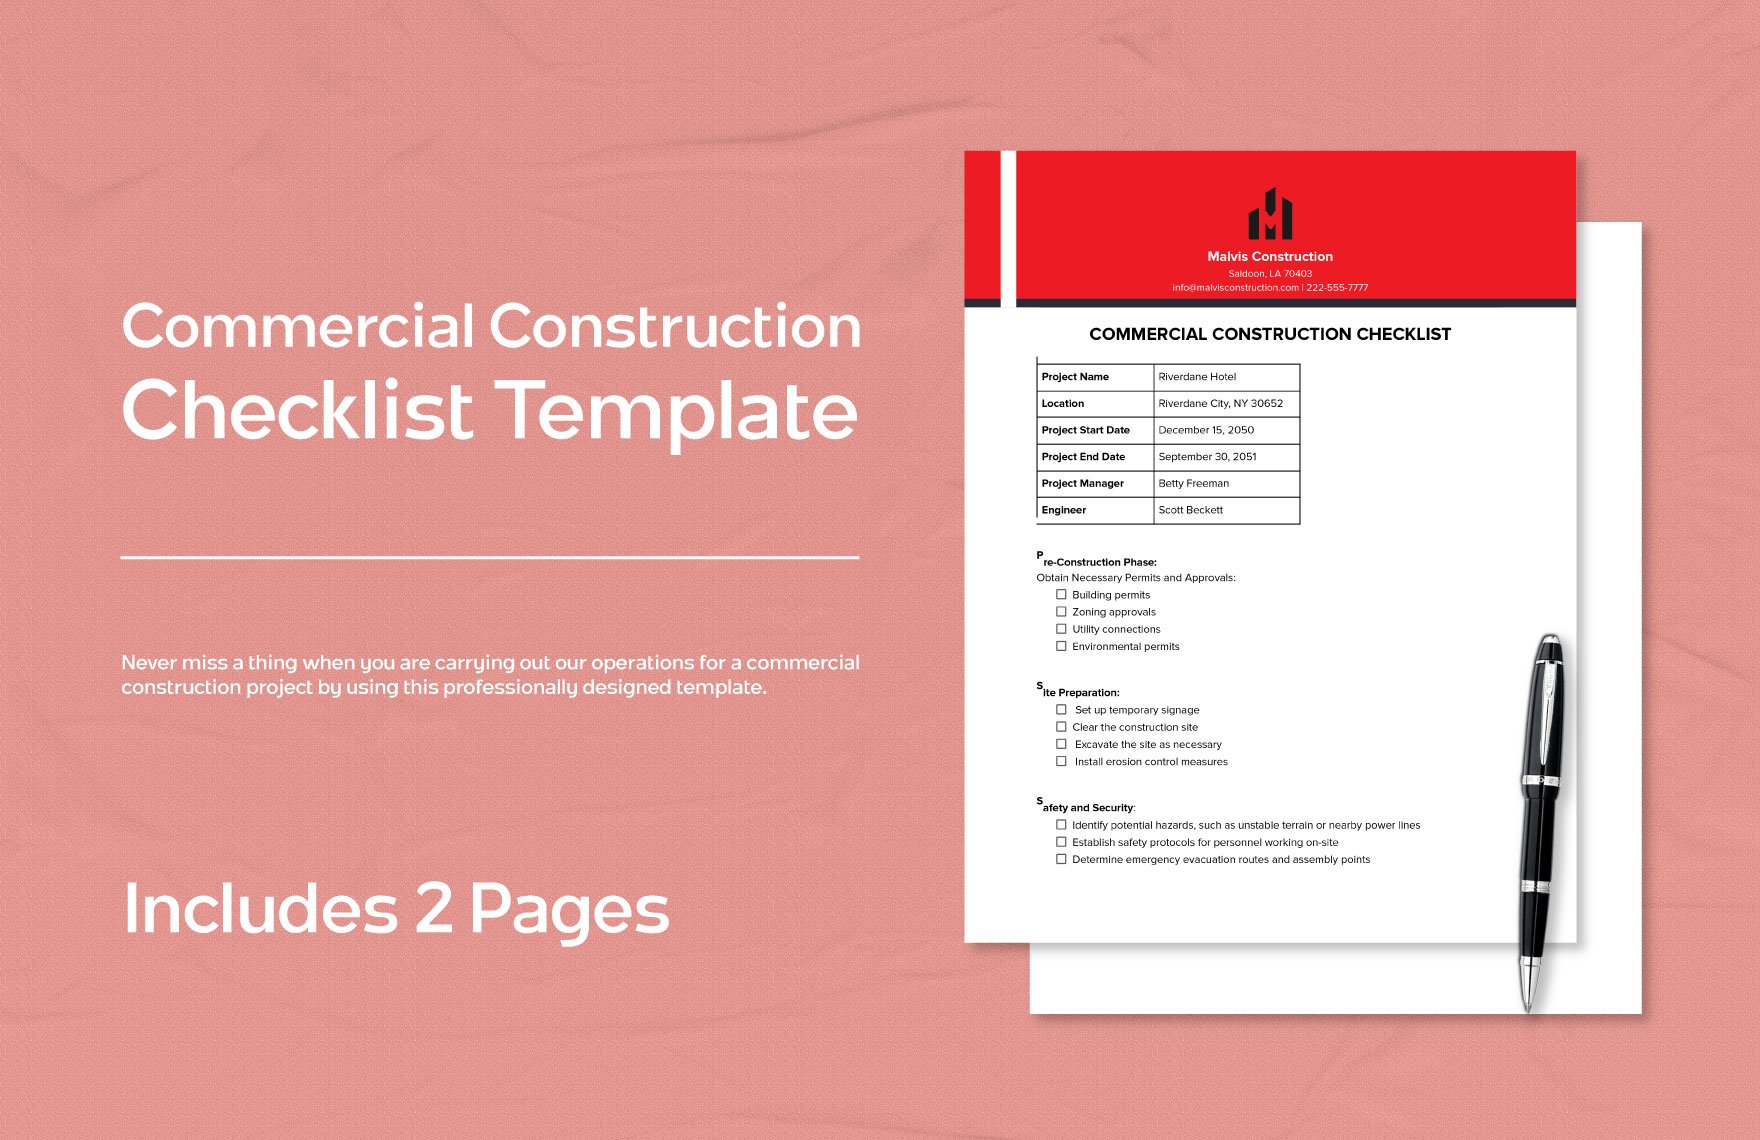 Commercial Construction Checklist Template